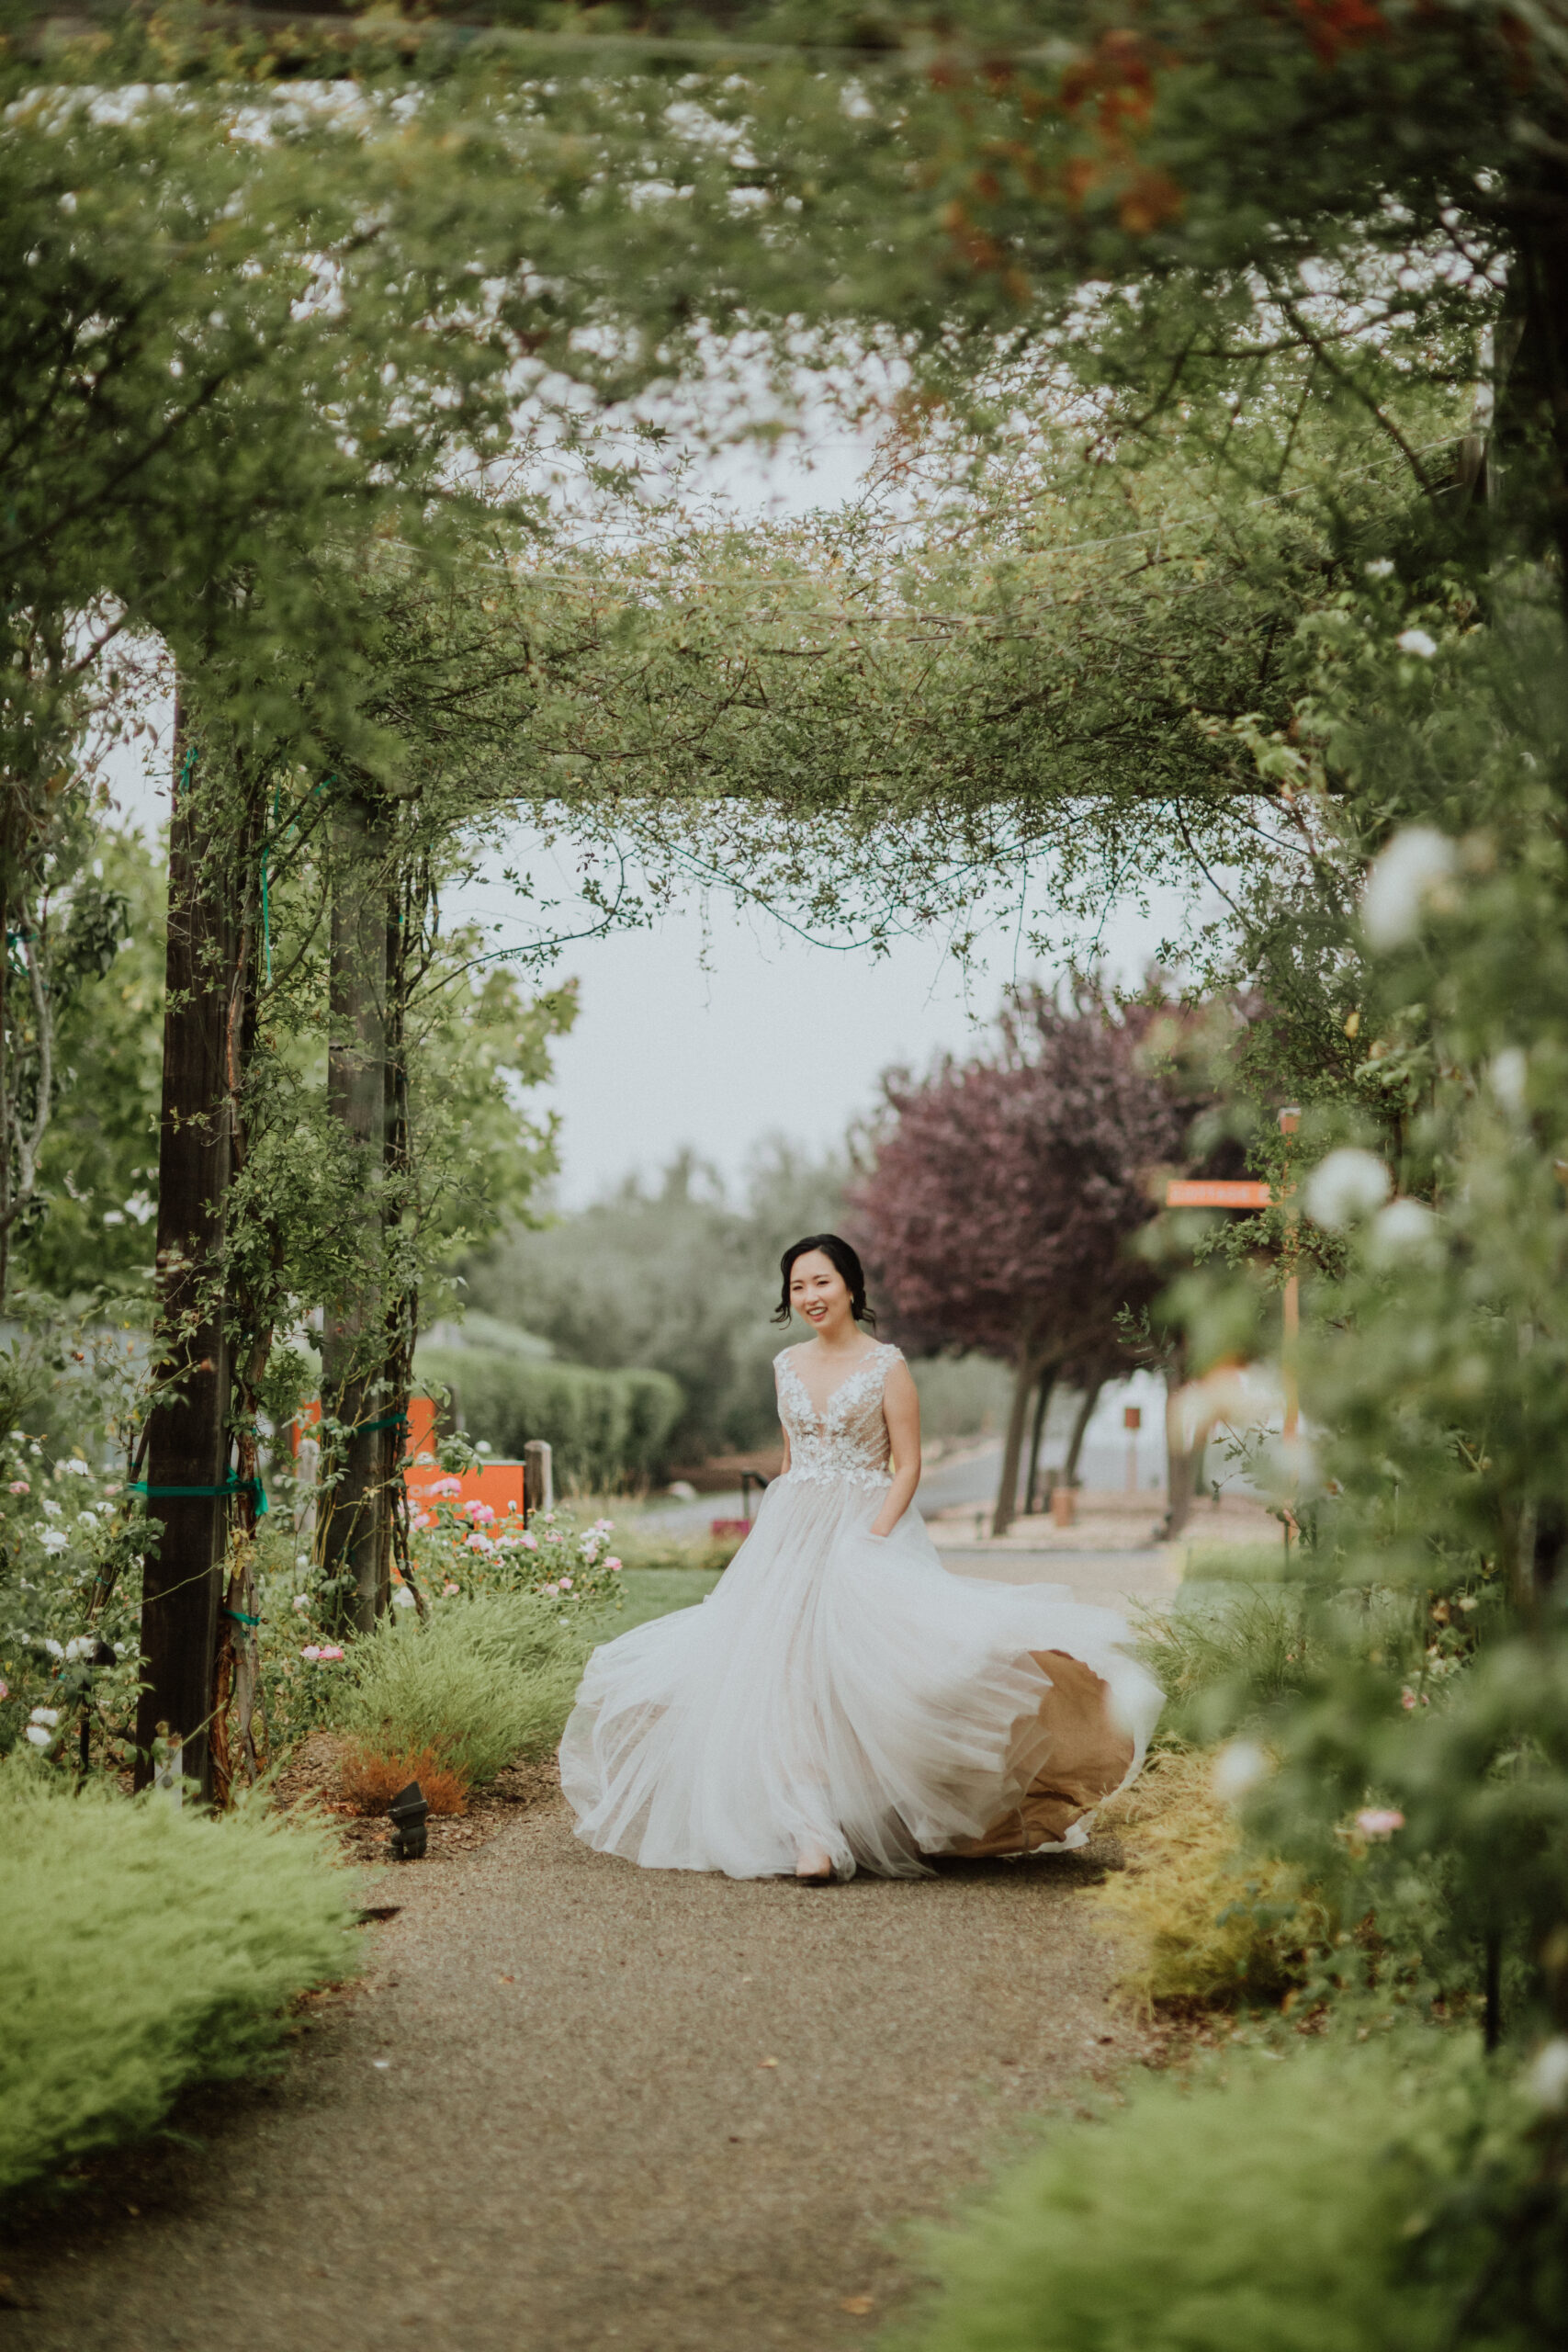 Stunning bride makes her entrance during her Napa valley vineyard wedding